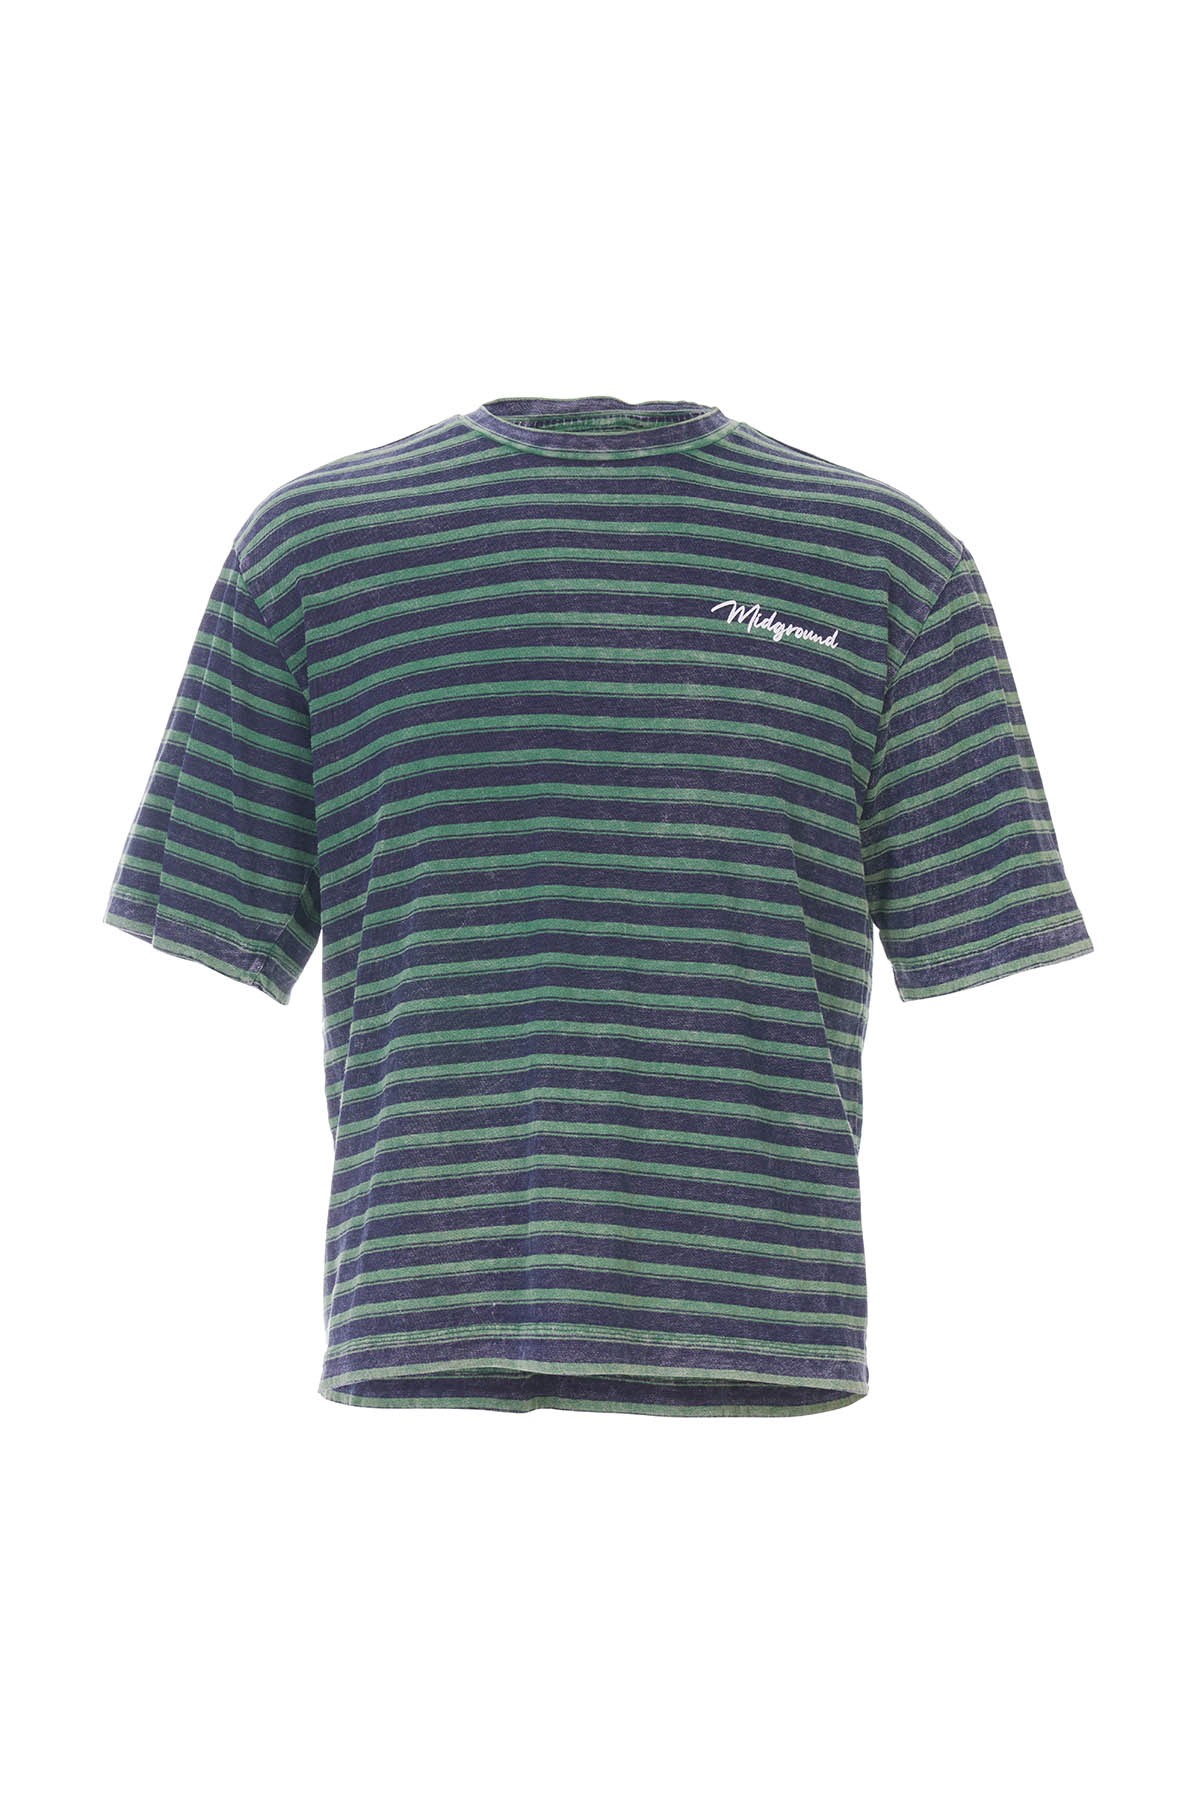 Drop #M157-C/1 Indigo Striped  Tshirt - Yeşil